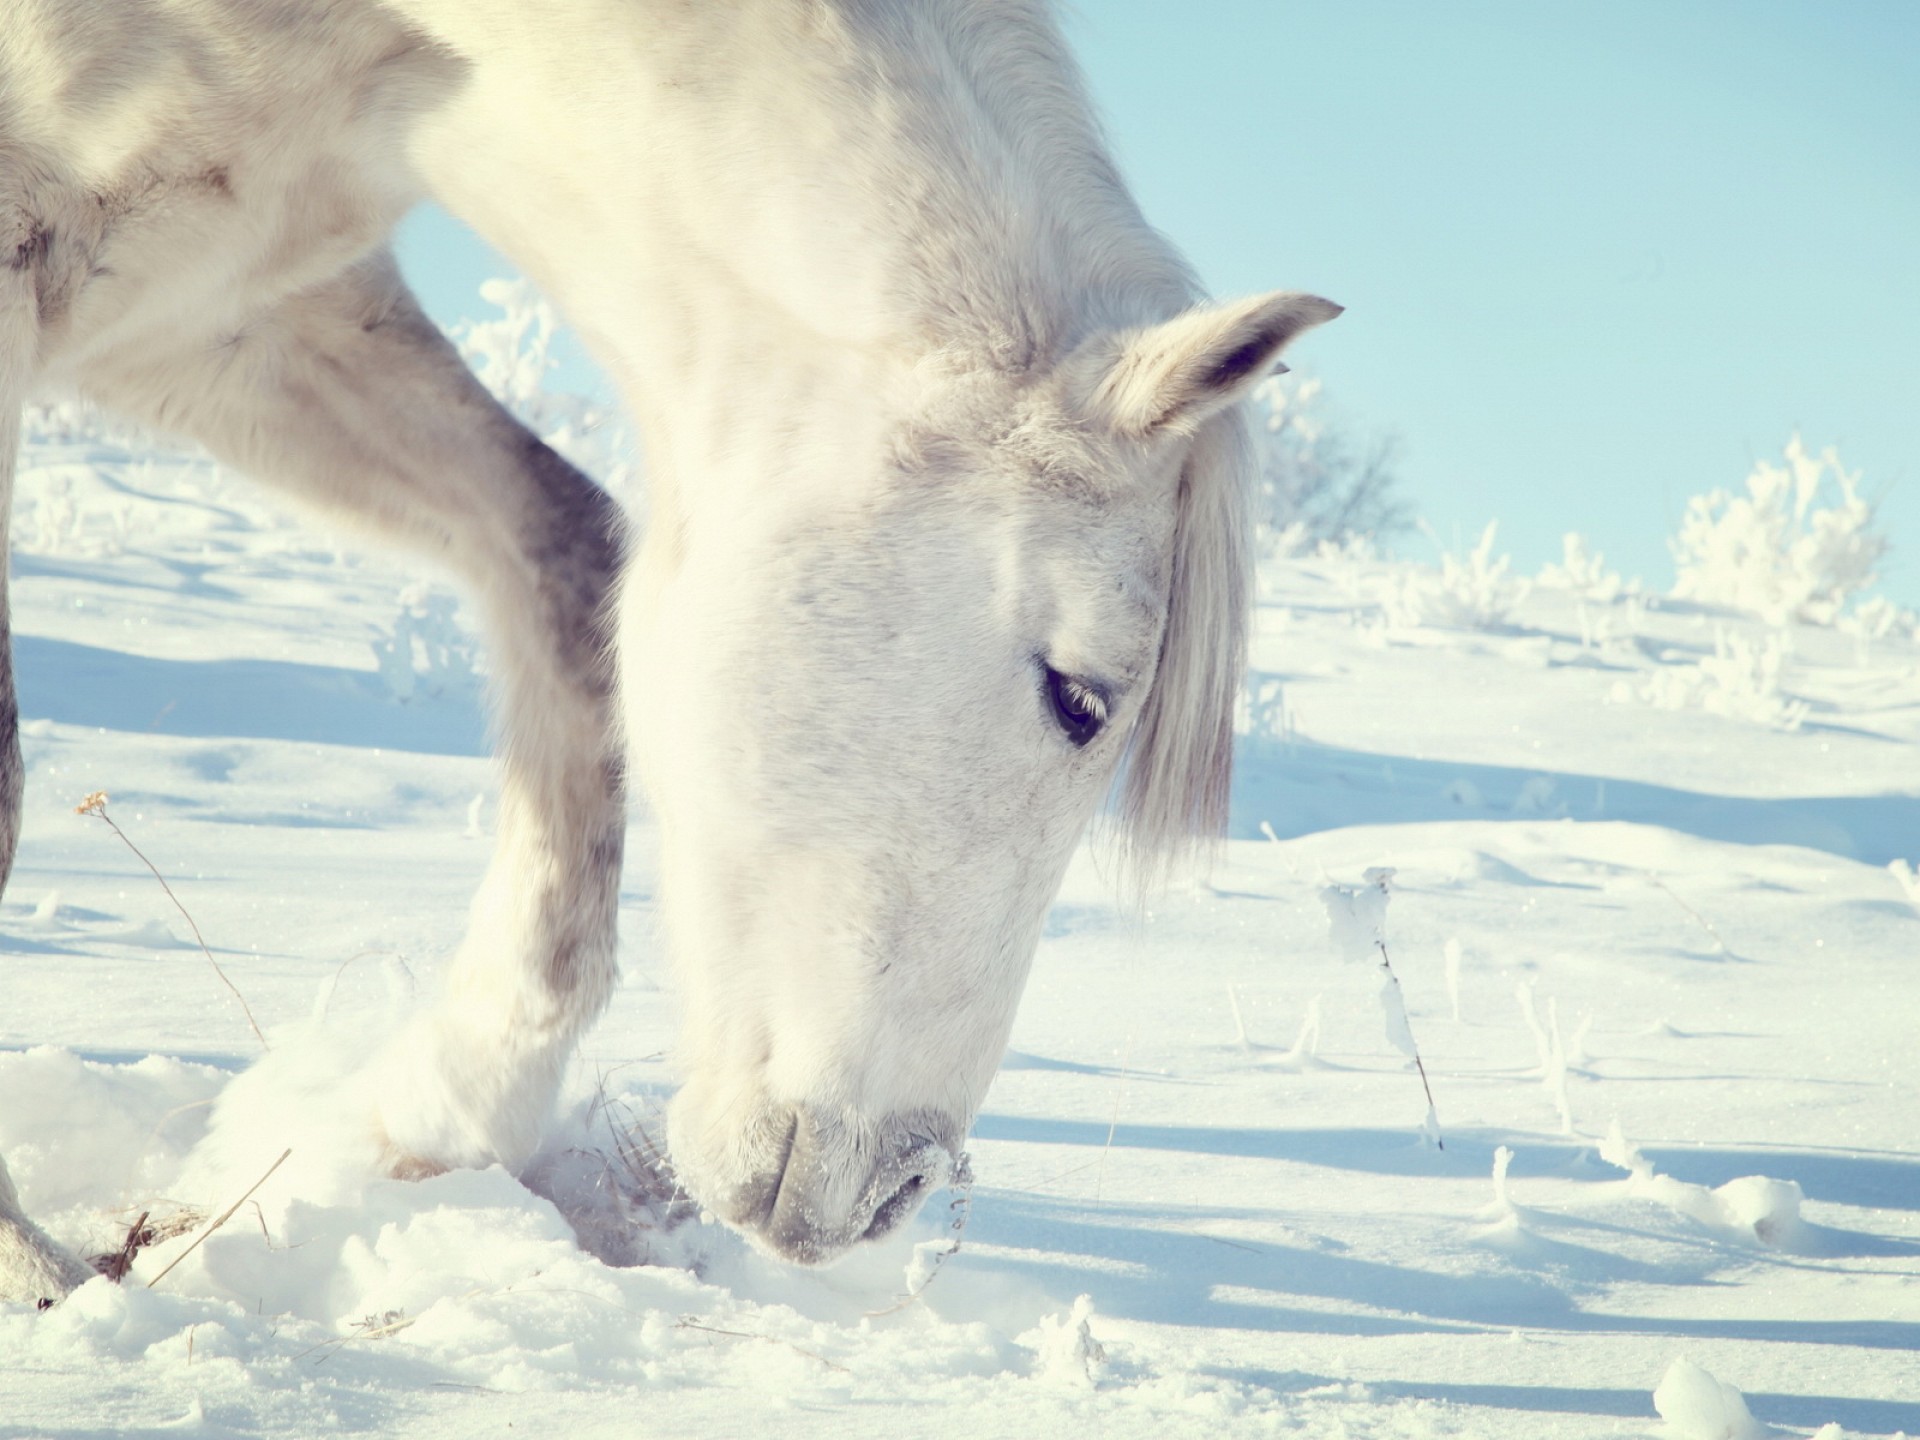 White Horse On The Snow Wallpaper